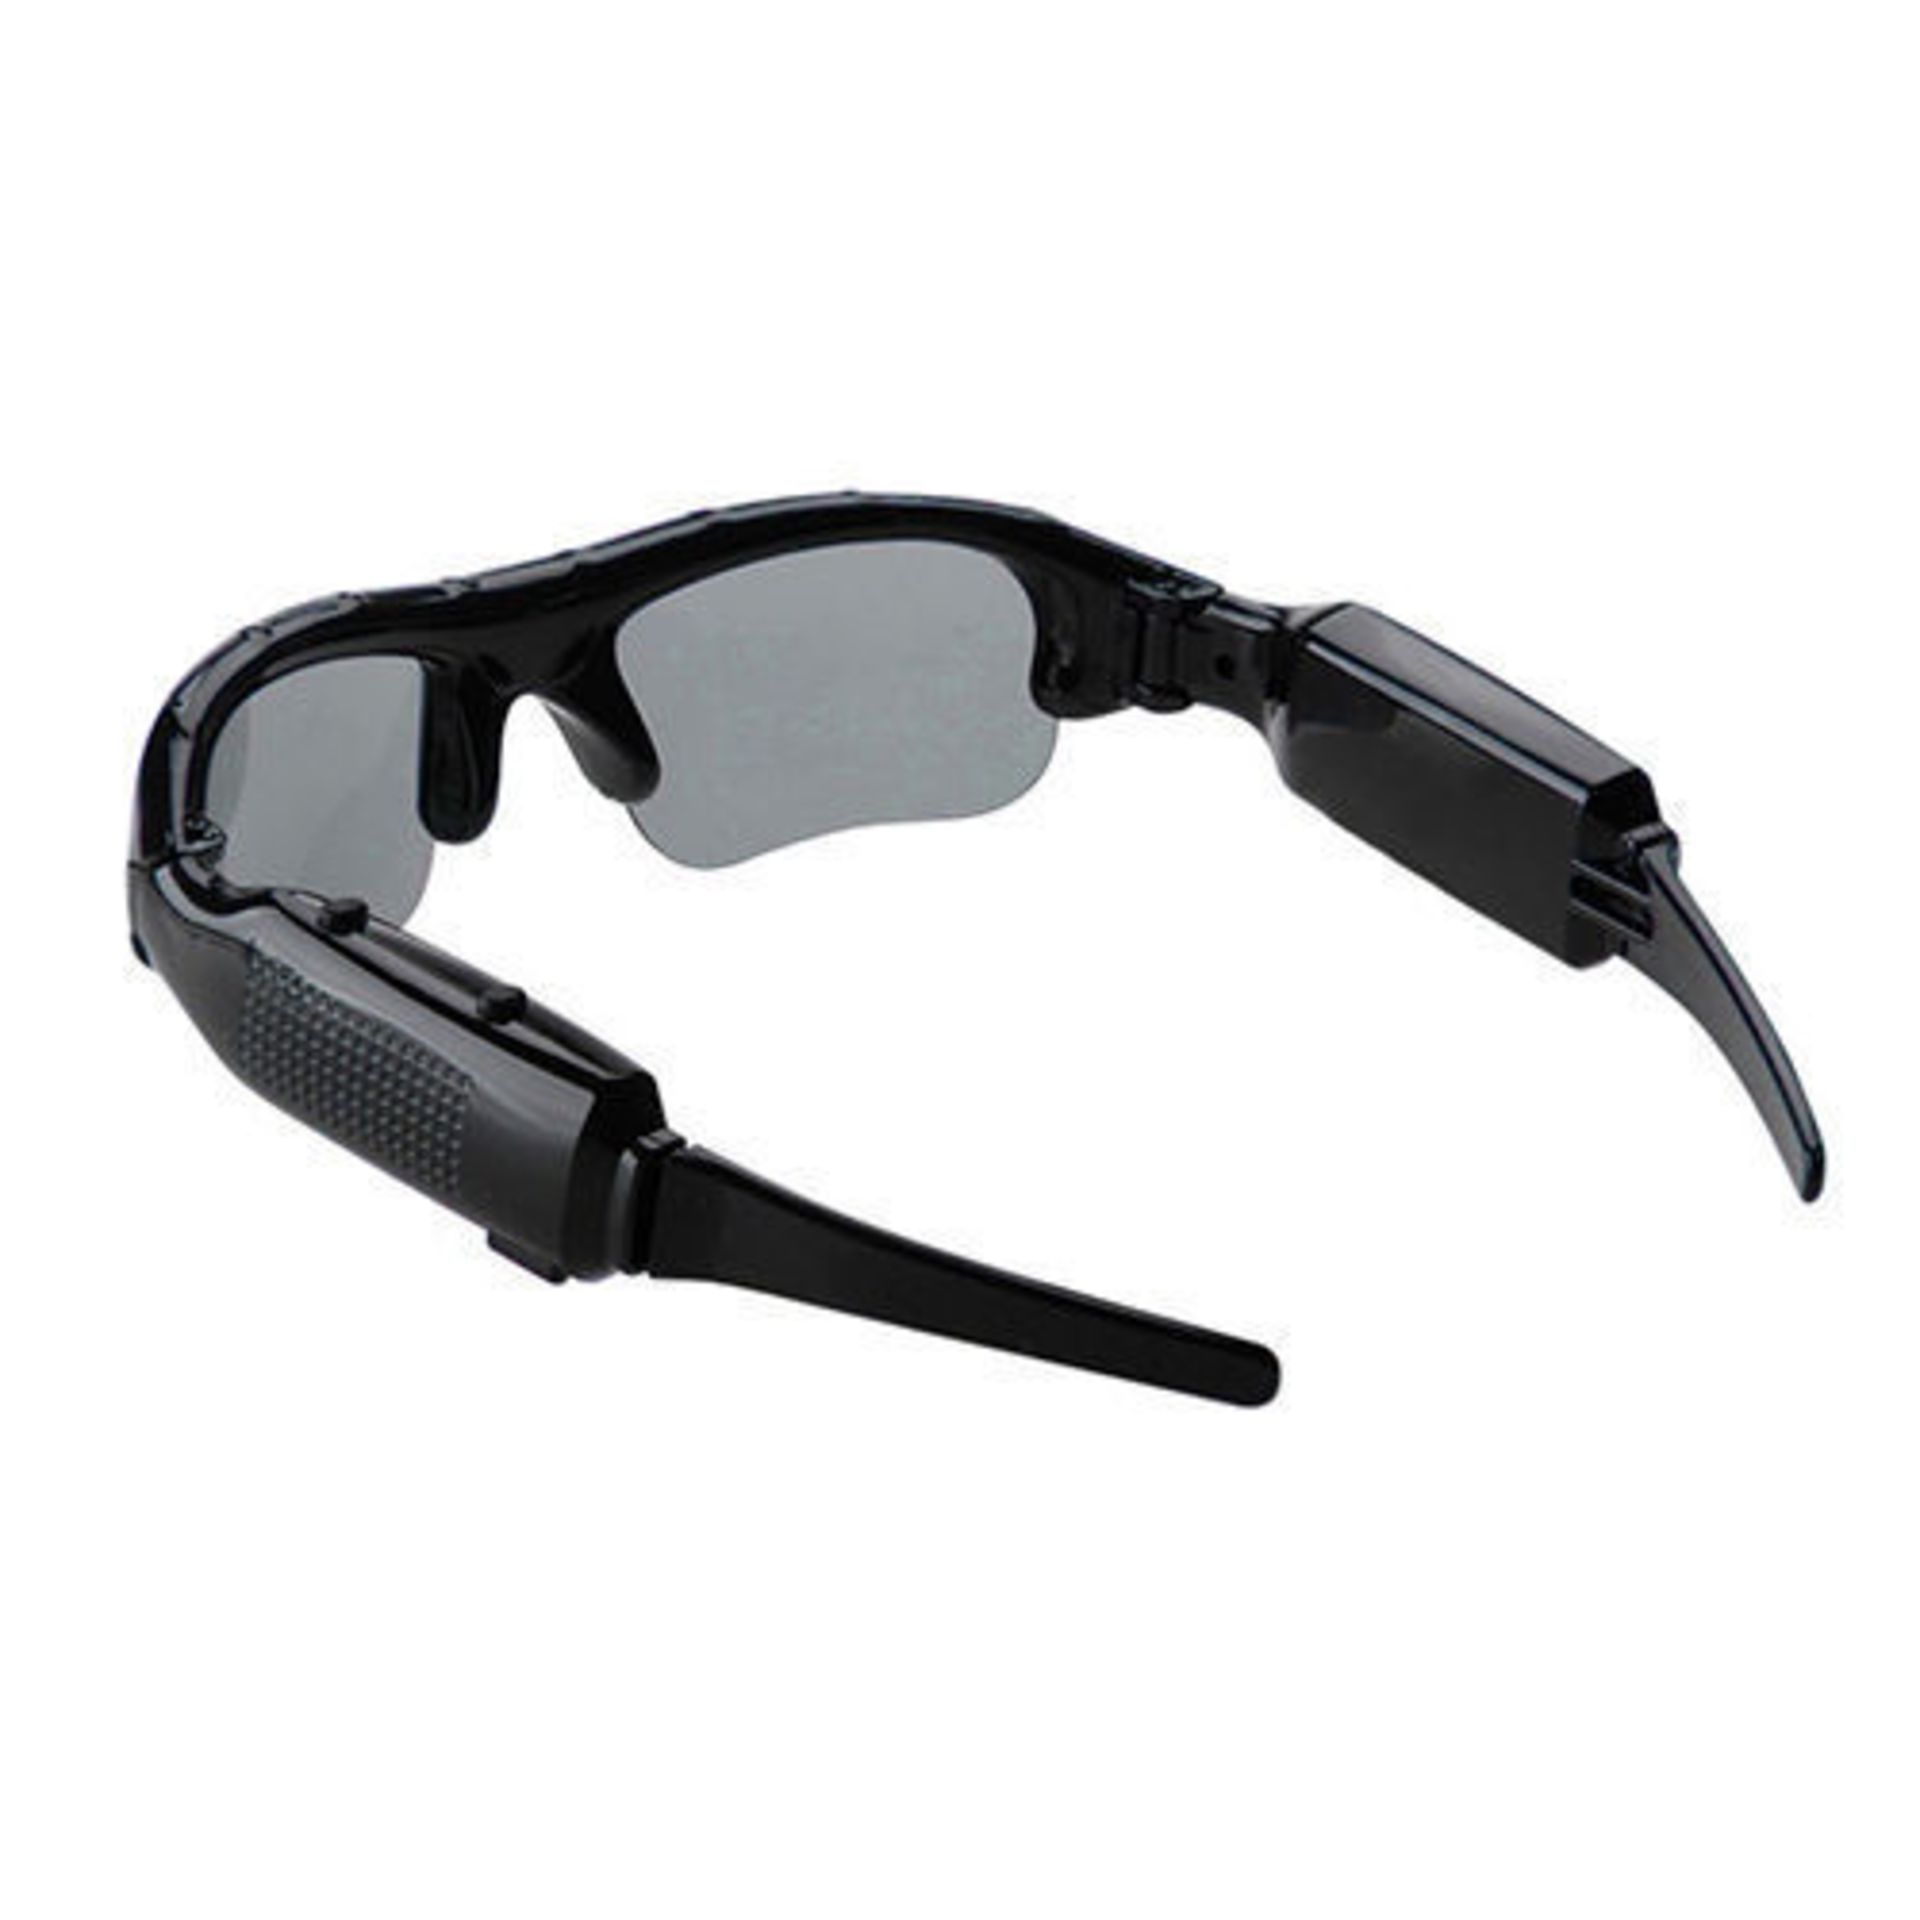 V Brand New Adventure Pro HD Video & Sound Recording Sunglasses Action Cam ISP £29.99 (Ebay) X 2 - Image 2 of 3